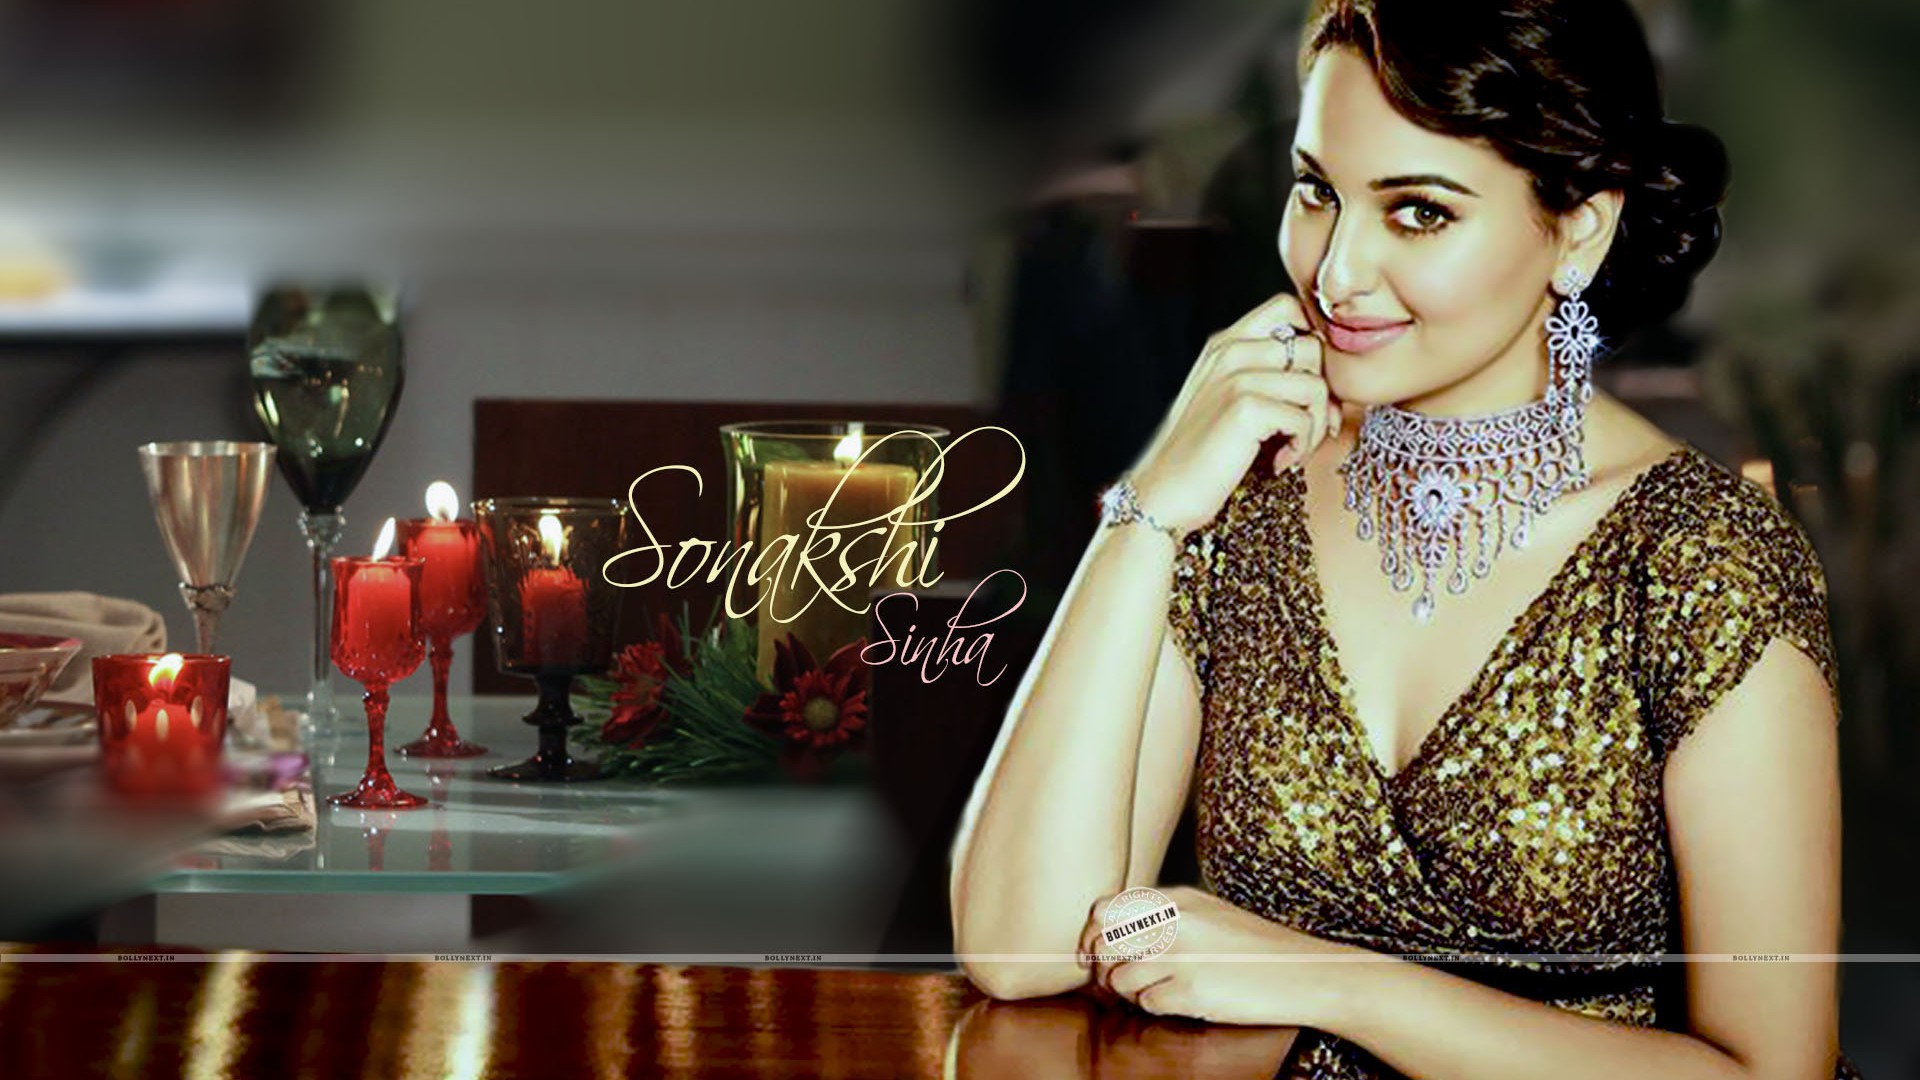 Sonakshi Sinha ~ The Utterly Stunning Beauty - Sonakshi Sinha Most Beautiful - HD Wallpaper 